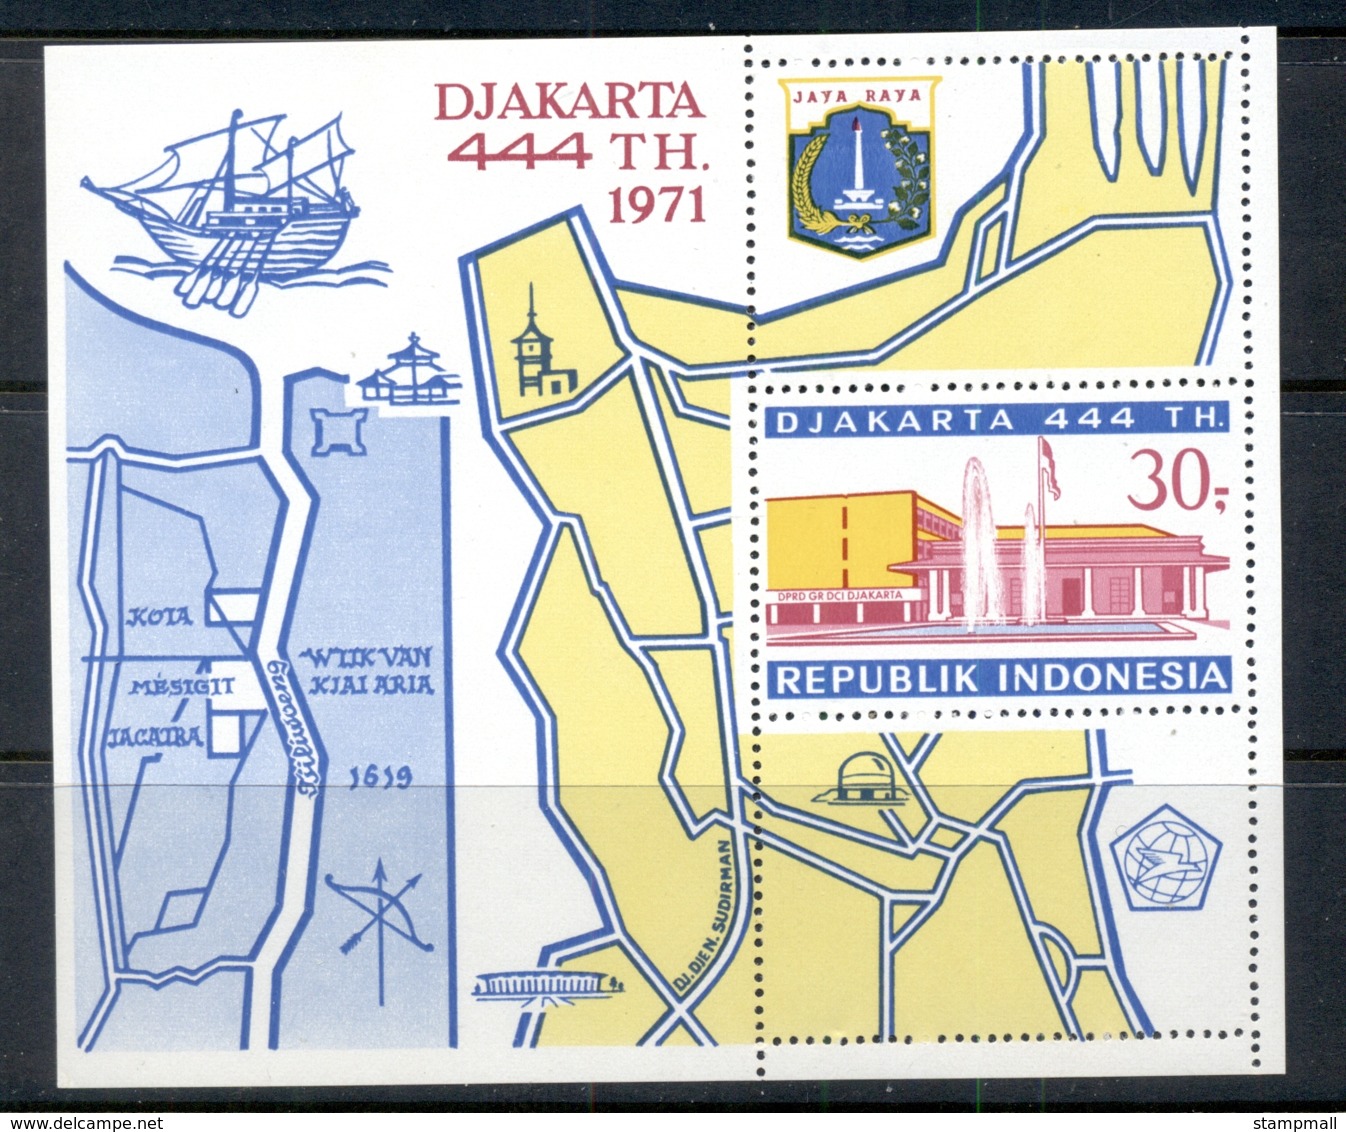 Indonesia 1971 Djakarta 444th Anniversary MS MUH - Indonesien